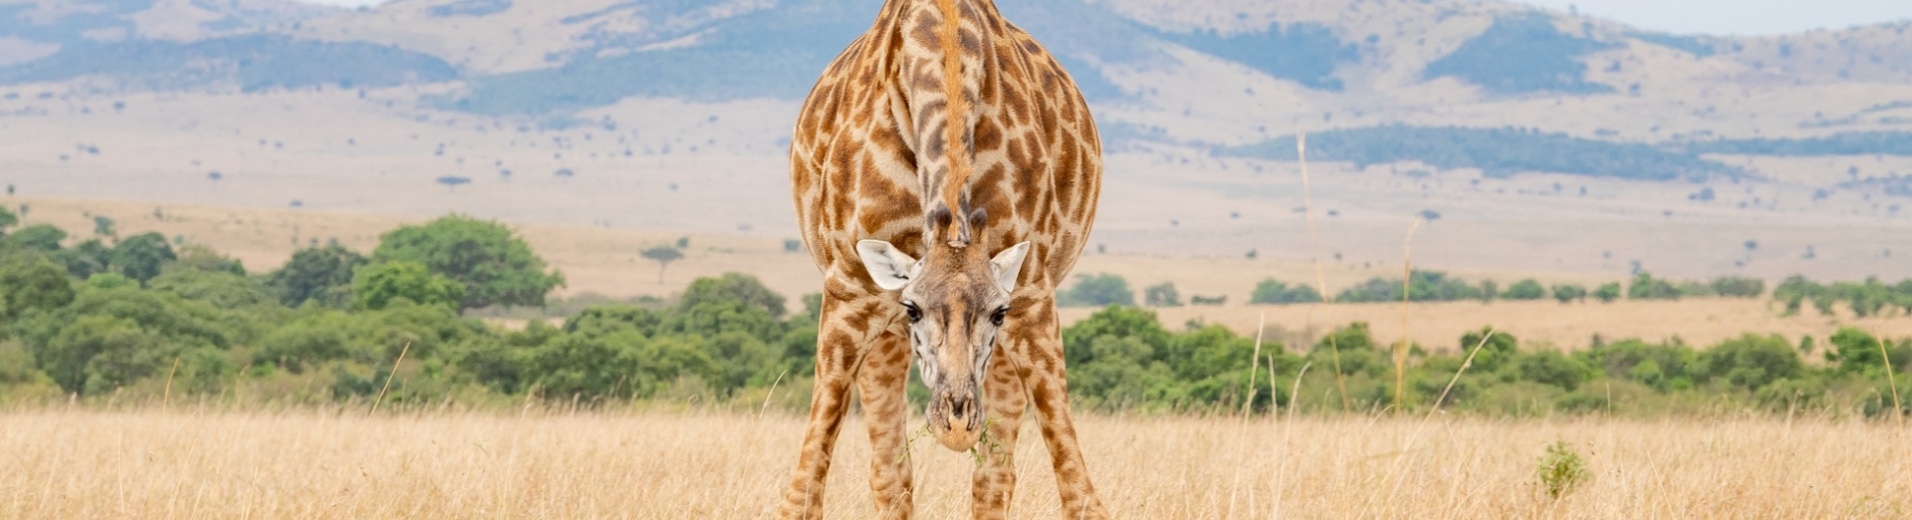 giraffe tanzanie